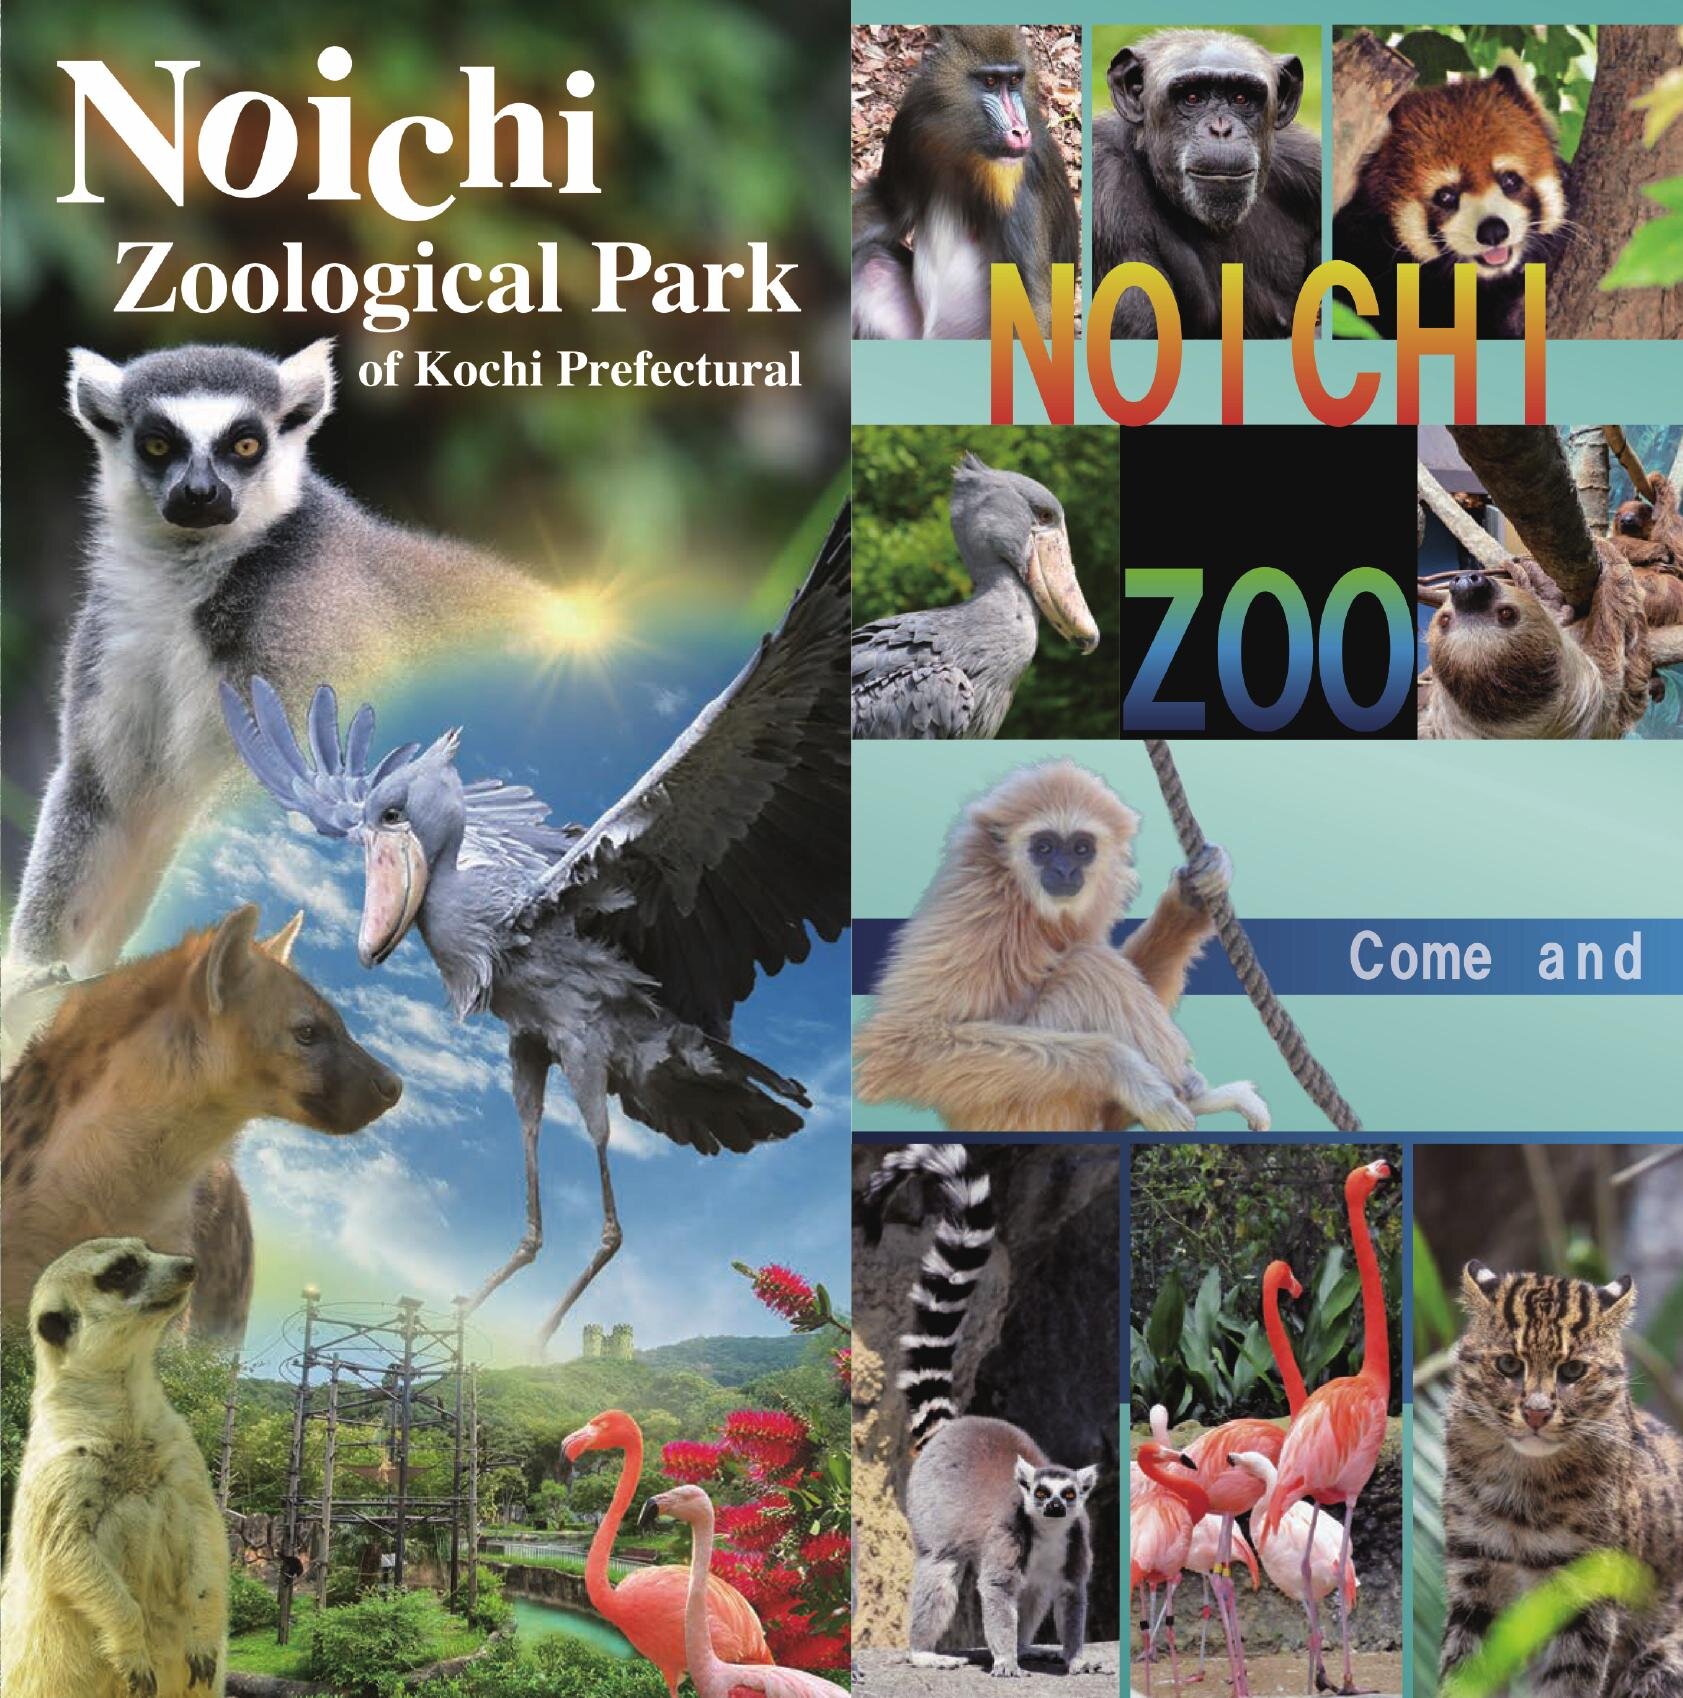 Noichi Zoological Park of Kochi Pref.